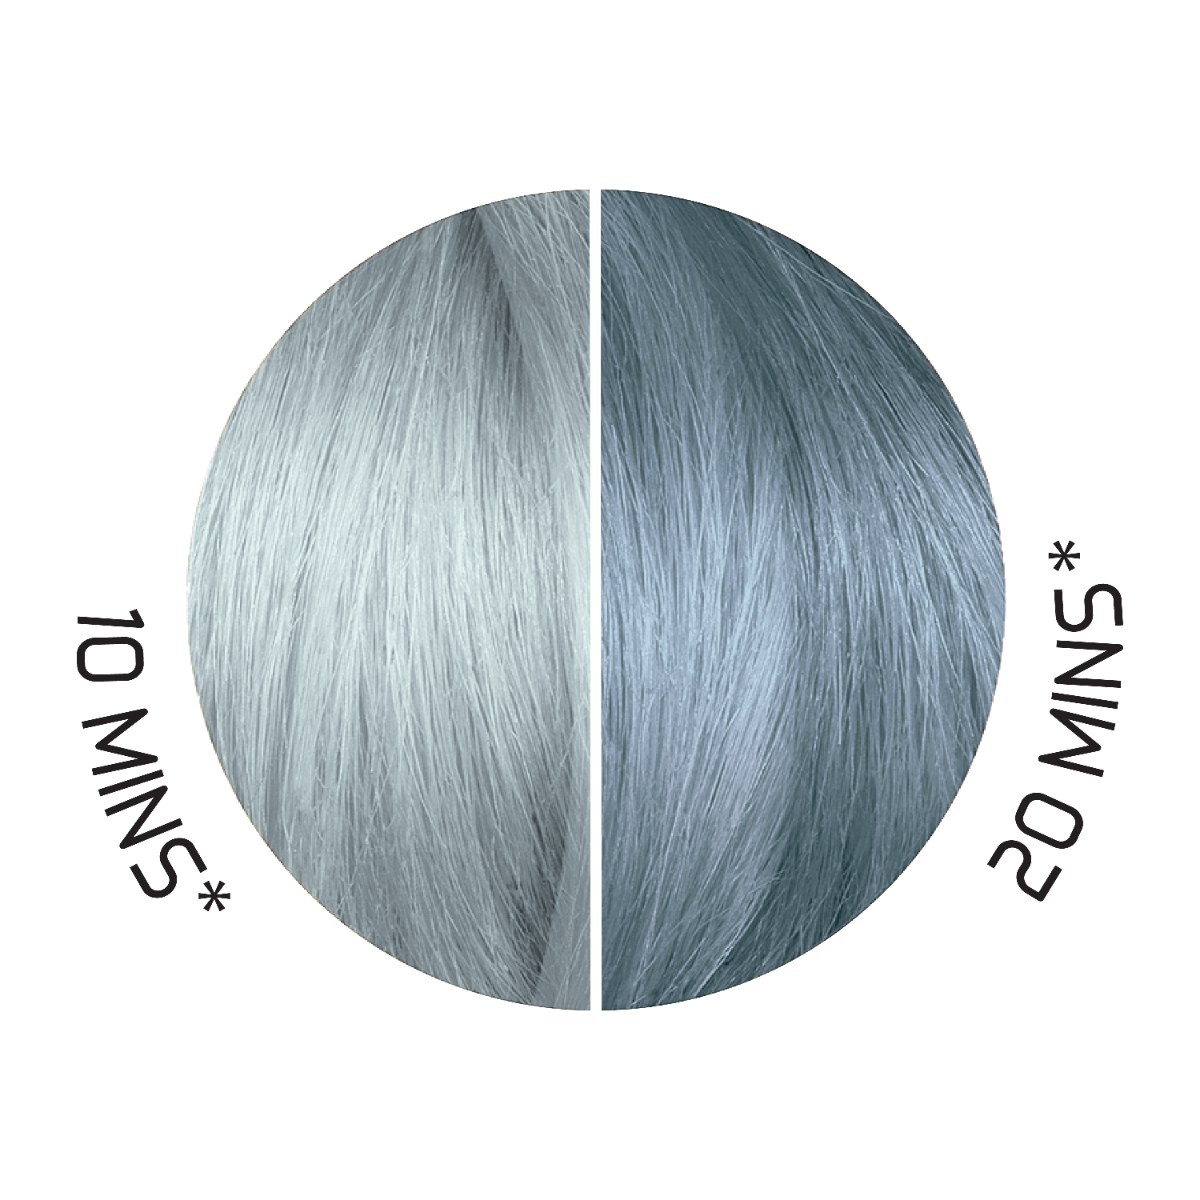 Swatch of Splat Hair Color&#39;s Titanium Hair Dye